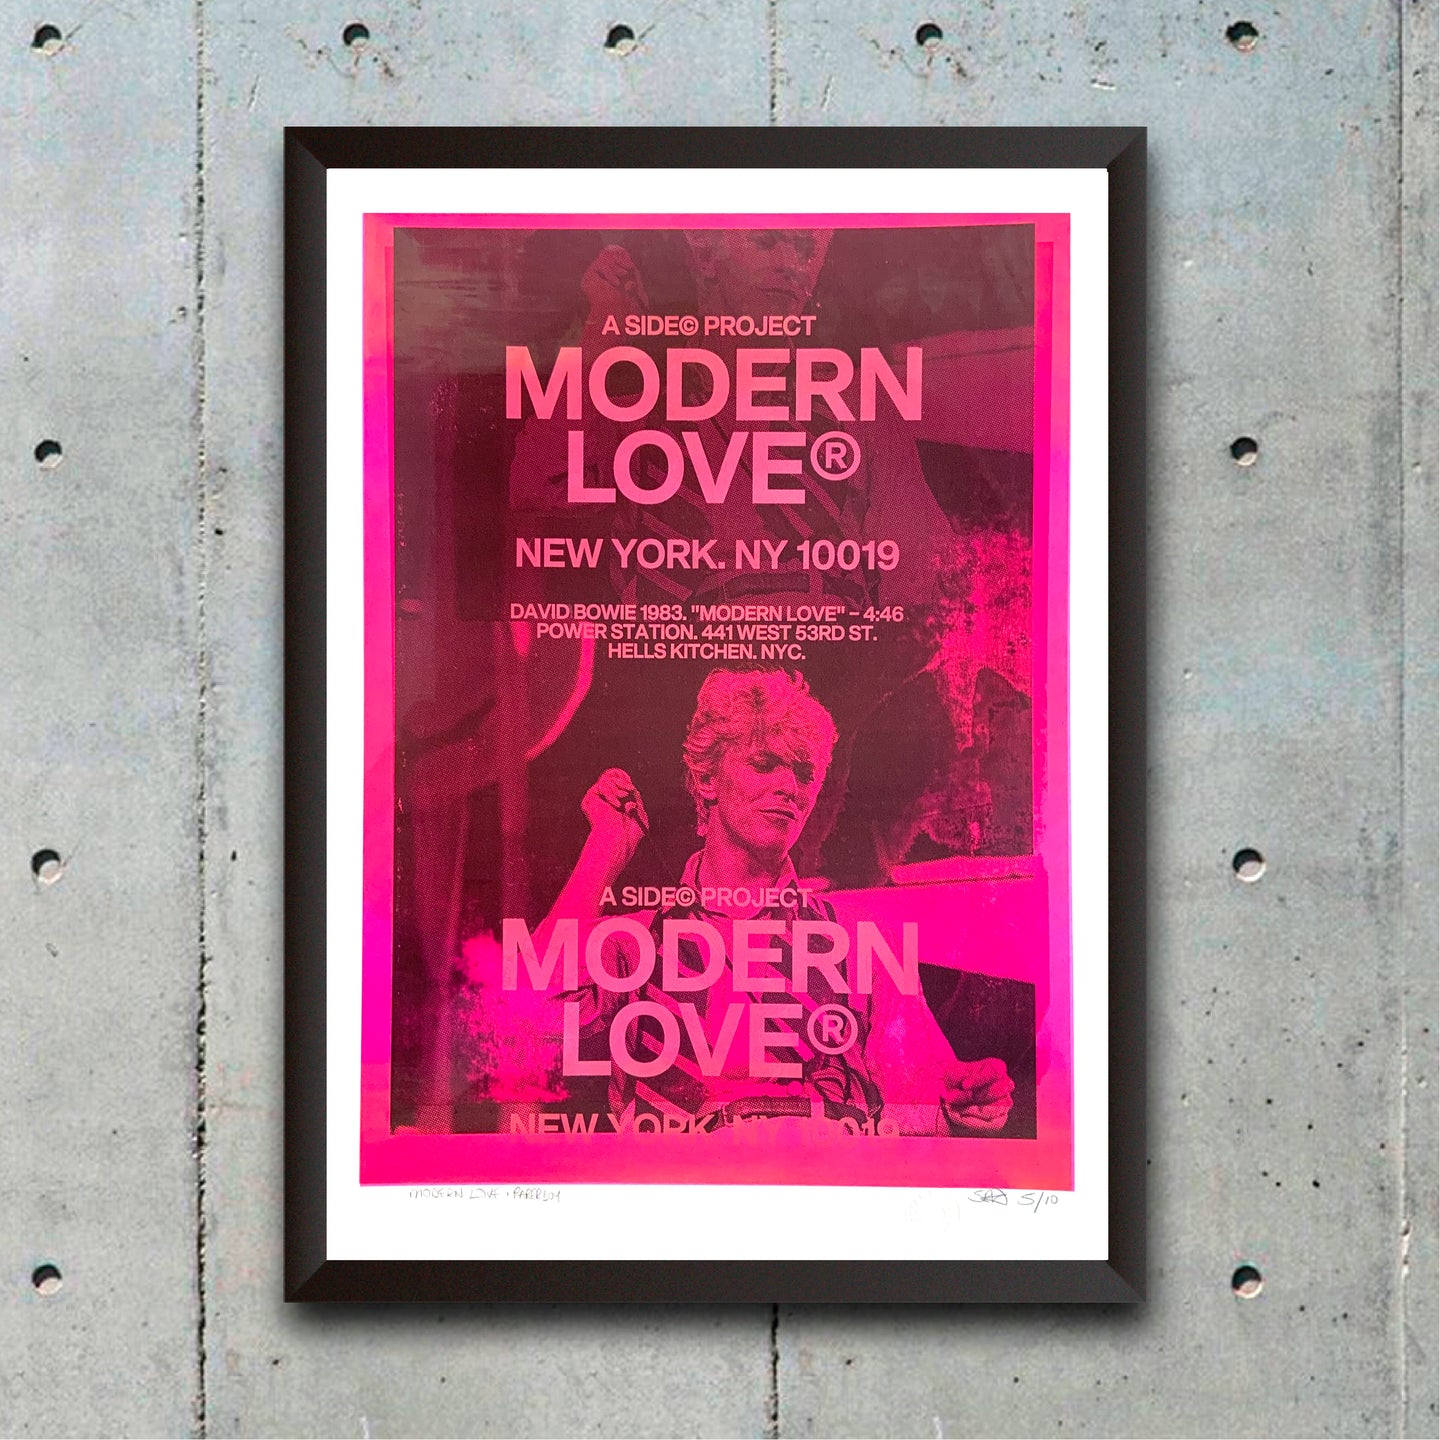 MODERN LOVE PRINTS - PAPERBOY SCREEN PRINT 1/10